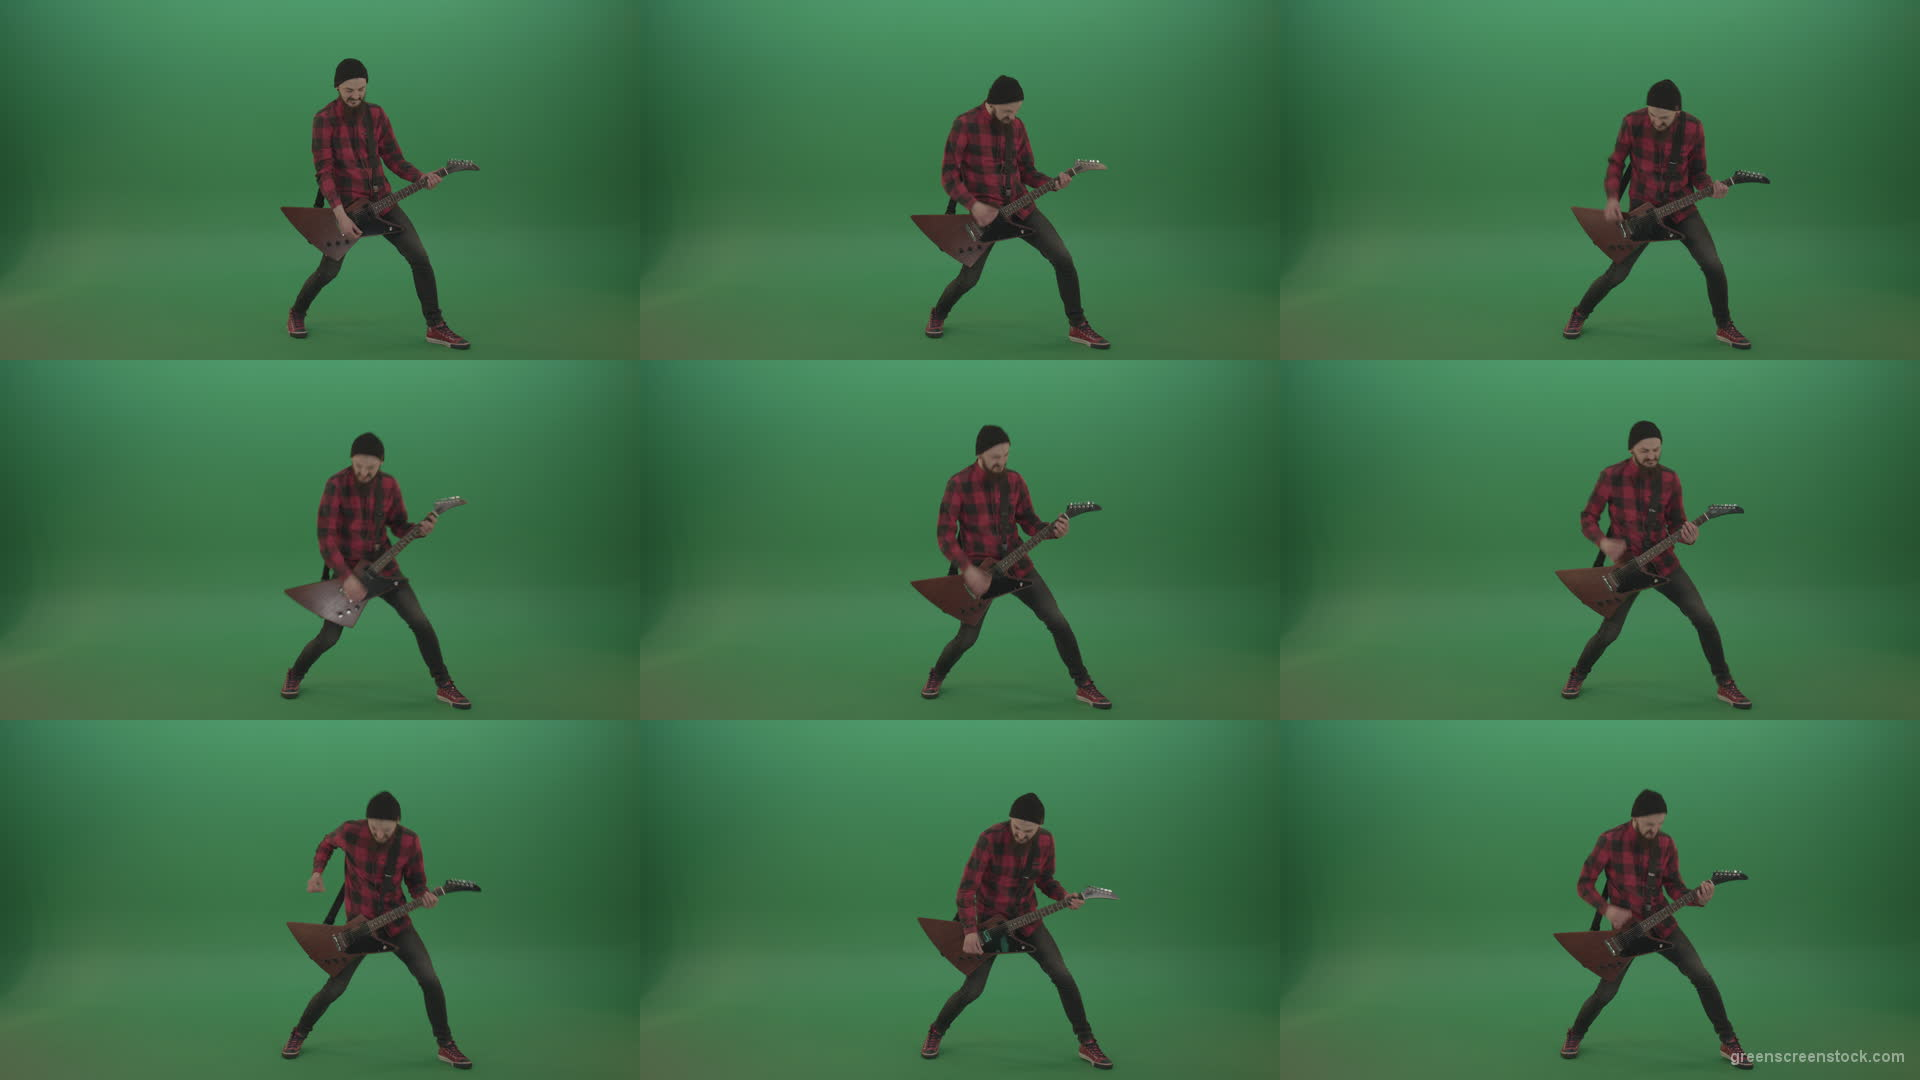 Full-size-Green-Screen-Musician-Rock-Guitarist-man-in-red-shirt-play-guitar-on-green-screen Green Screen Stock